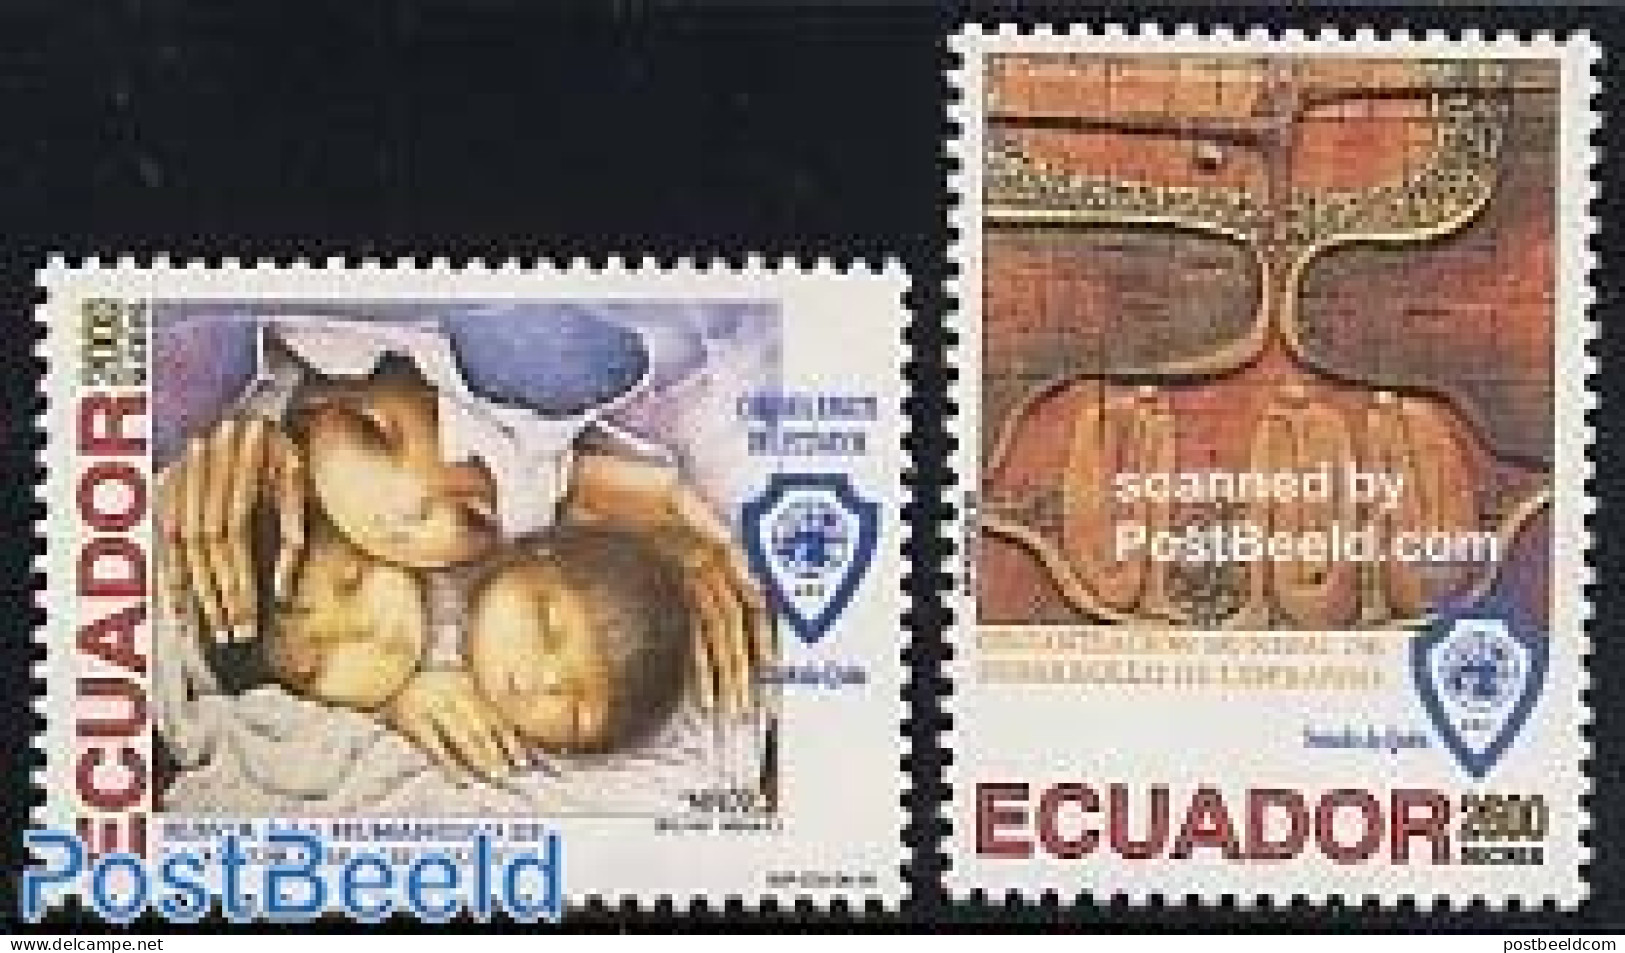 Ecuador 1996 Junior Chamber Of Commerce 2v, Mint NH, Various - Export & Trade - Factories & Industries